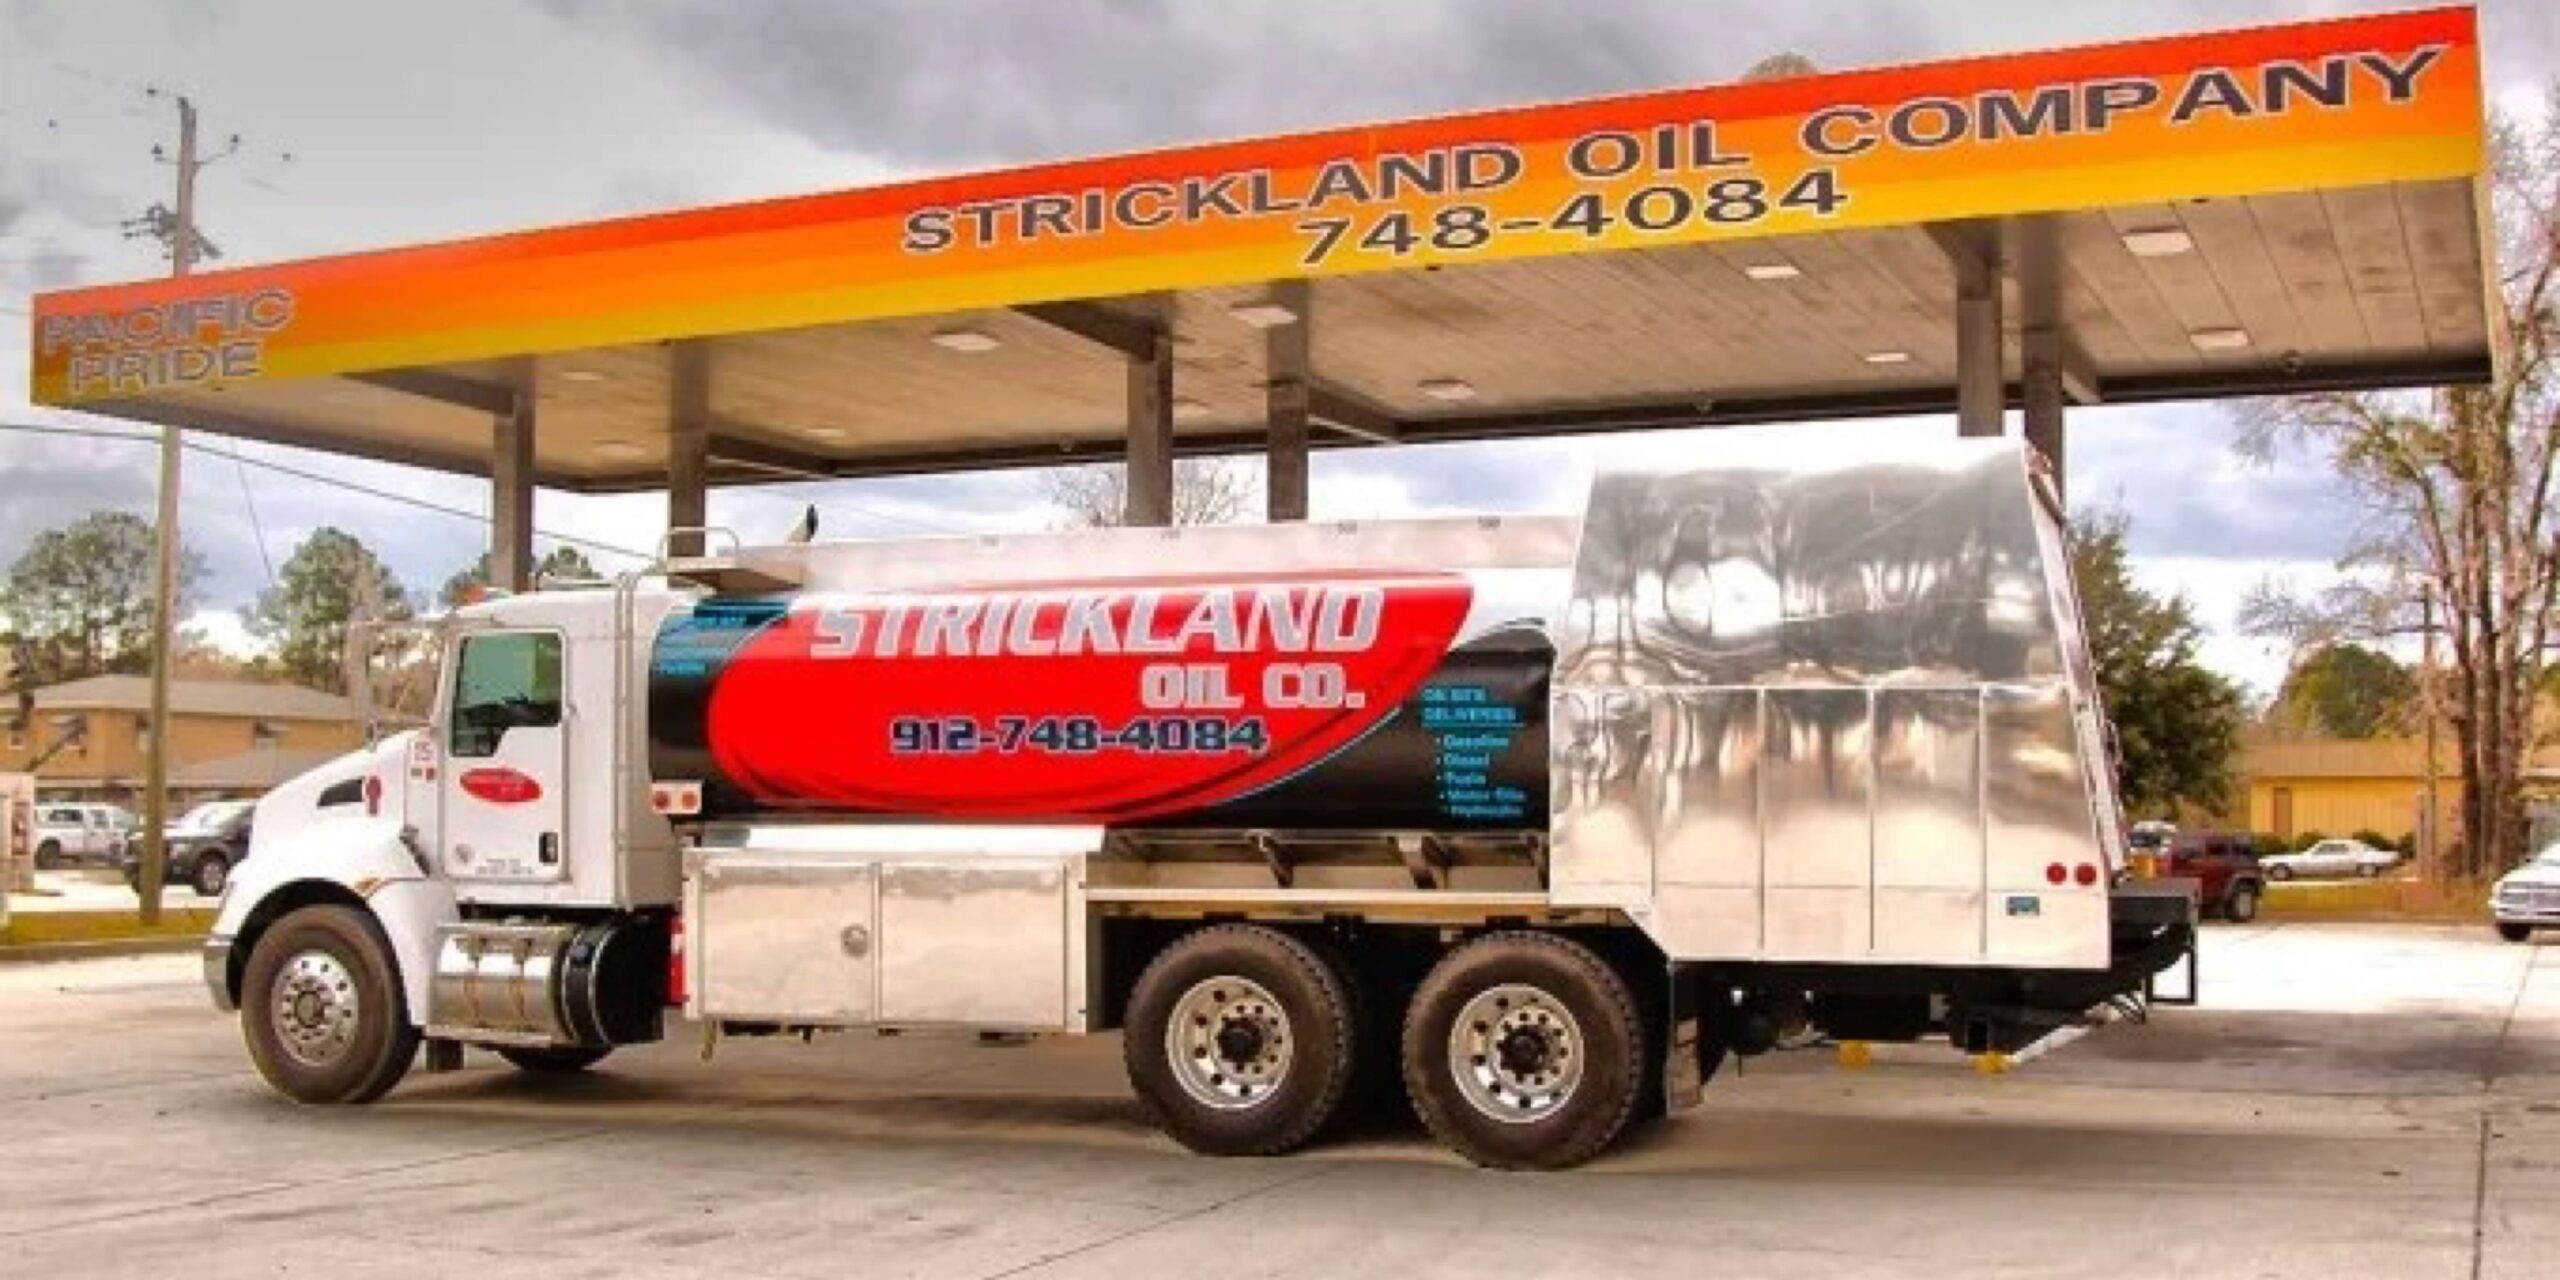 Colonial Oil Acquires Strickland Oil Company